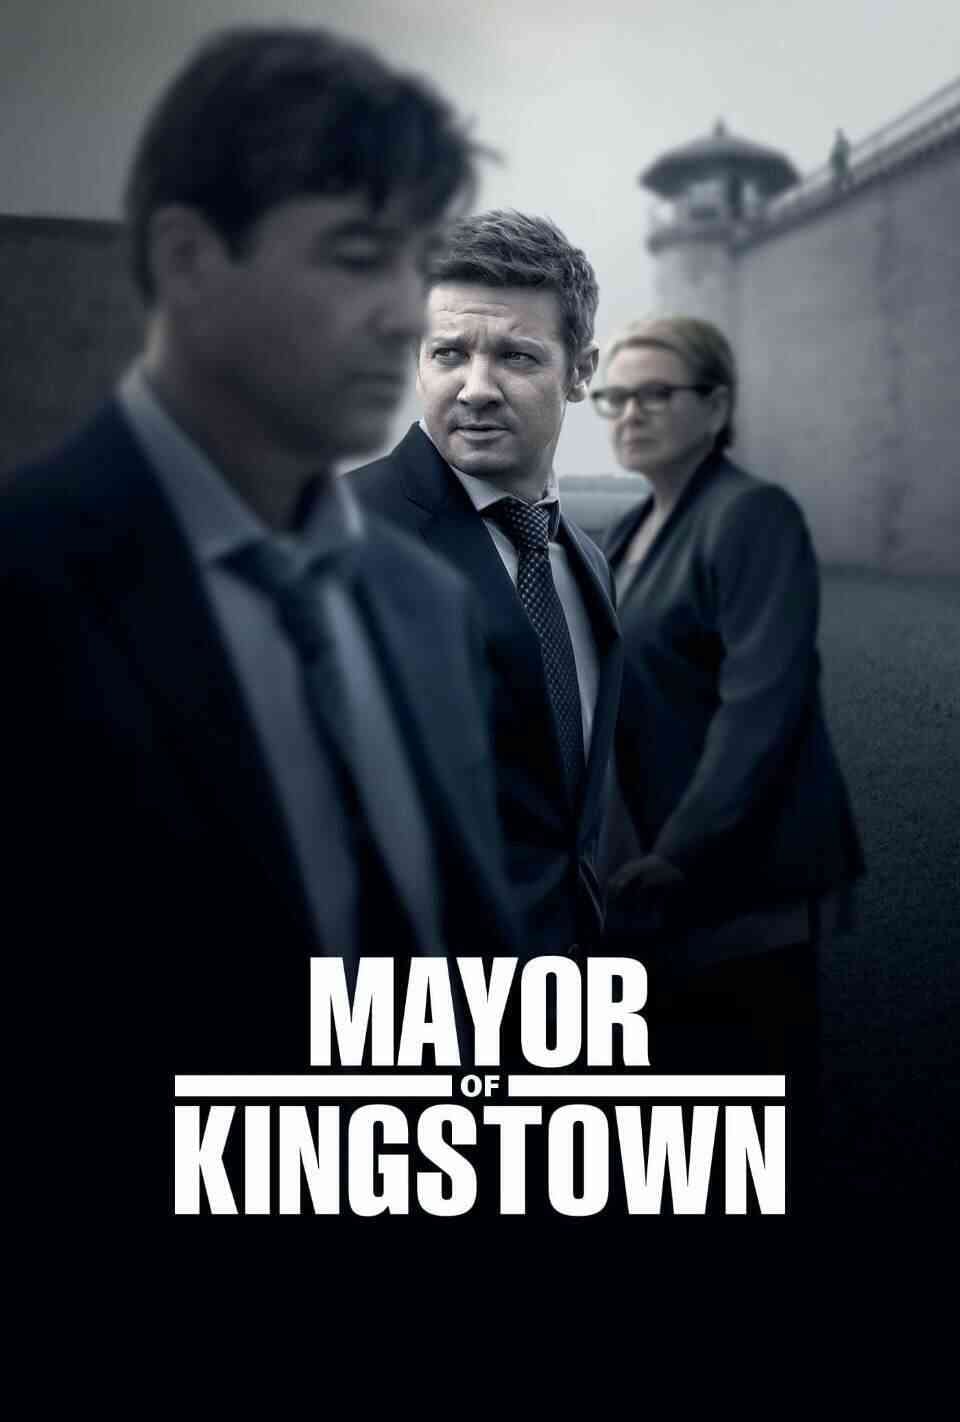 Read Mayor of Kingstown screenplay (poster)